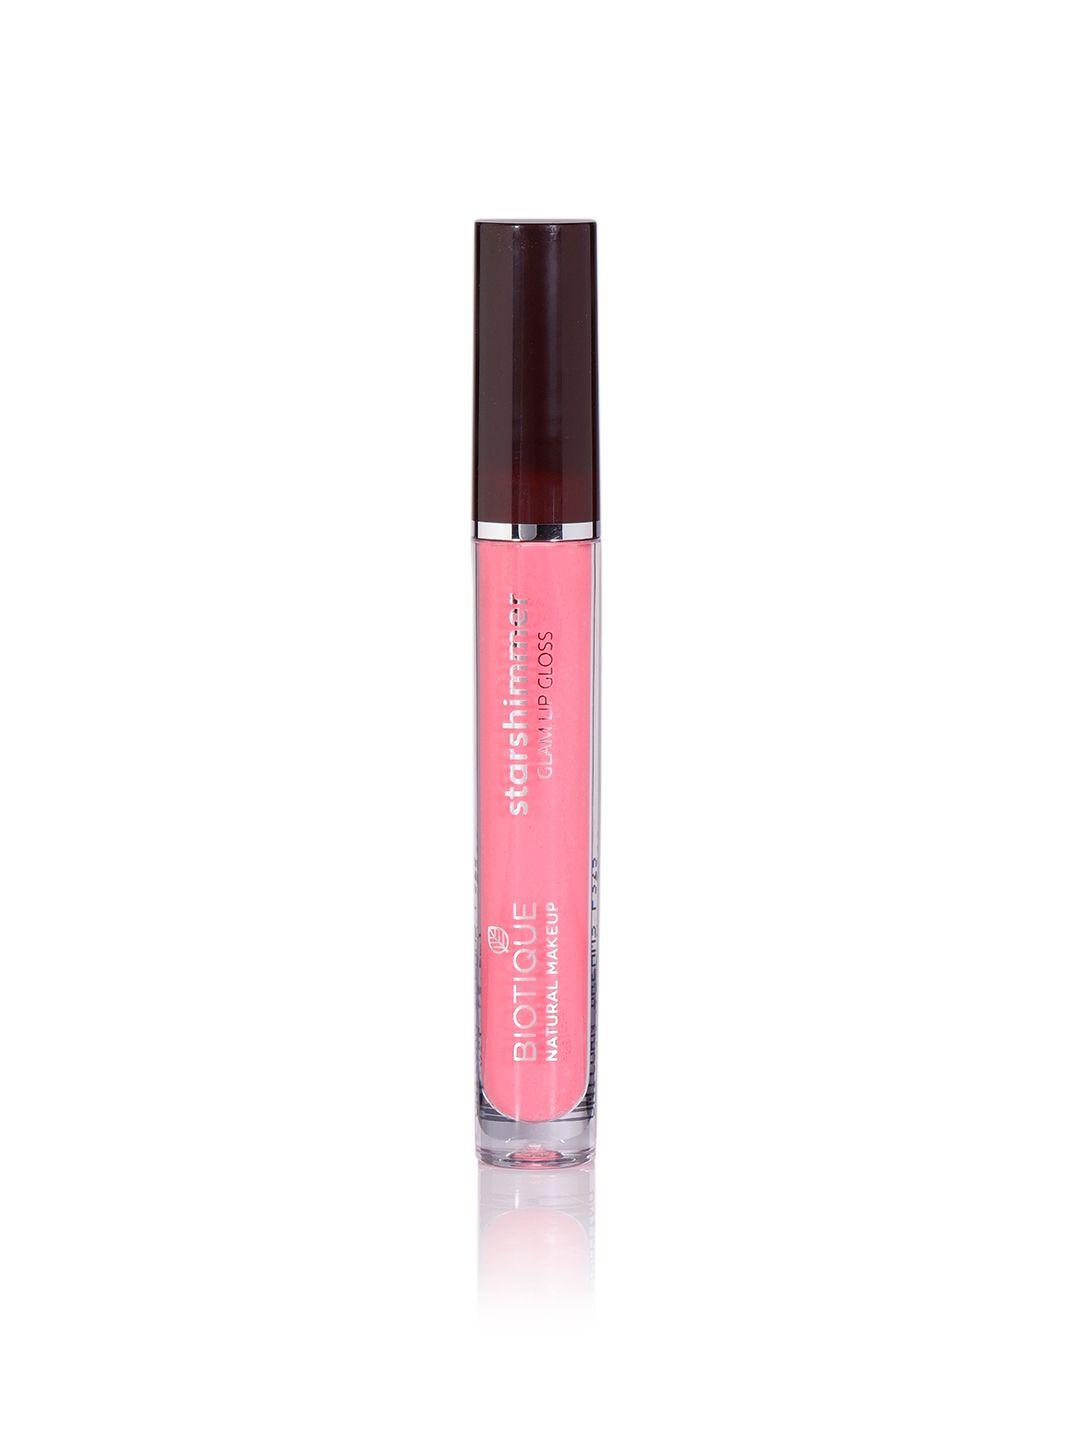 biotique natural makeup starshimmer glam lip gloss - unicorn dreams p325 3.5 ml